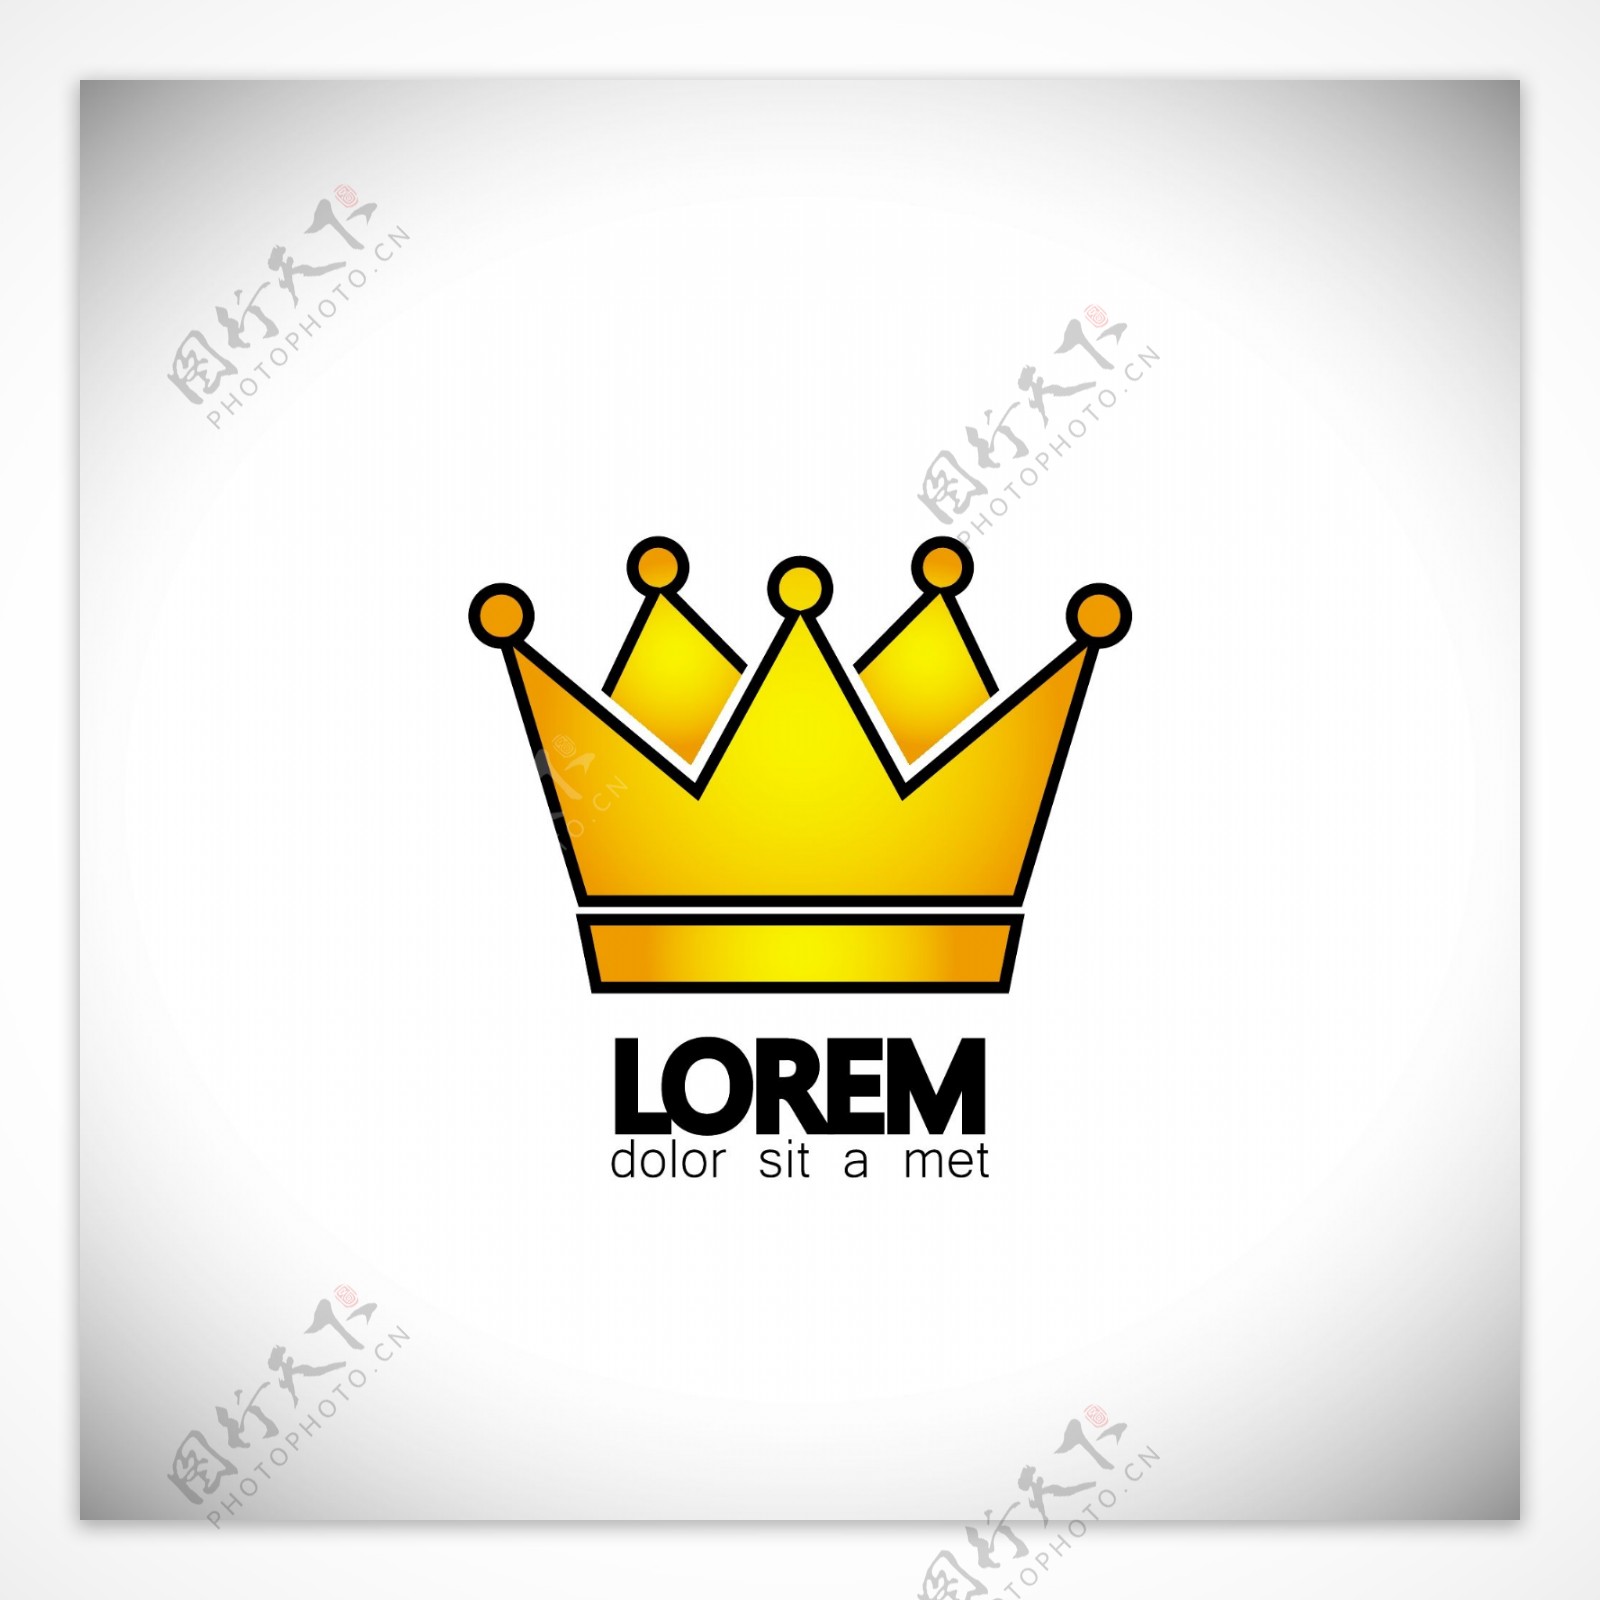 lorem金色抽象皇冠logo模板